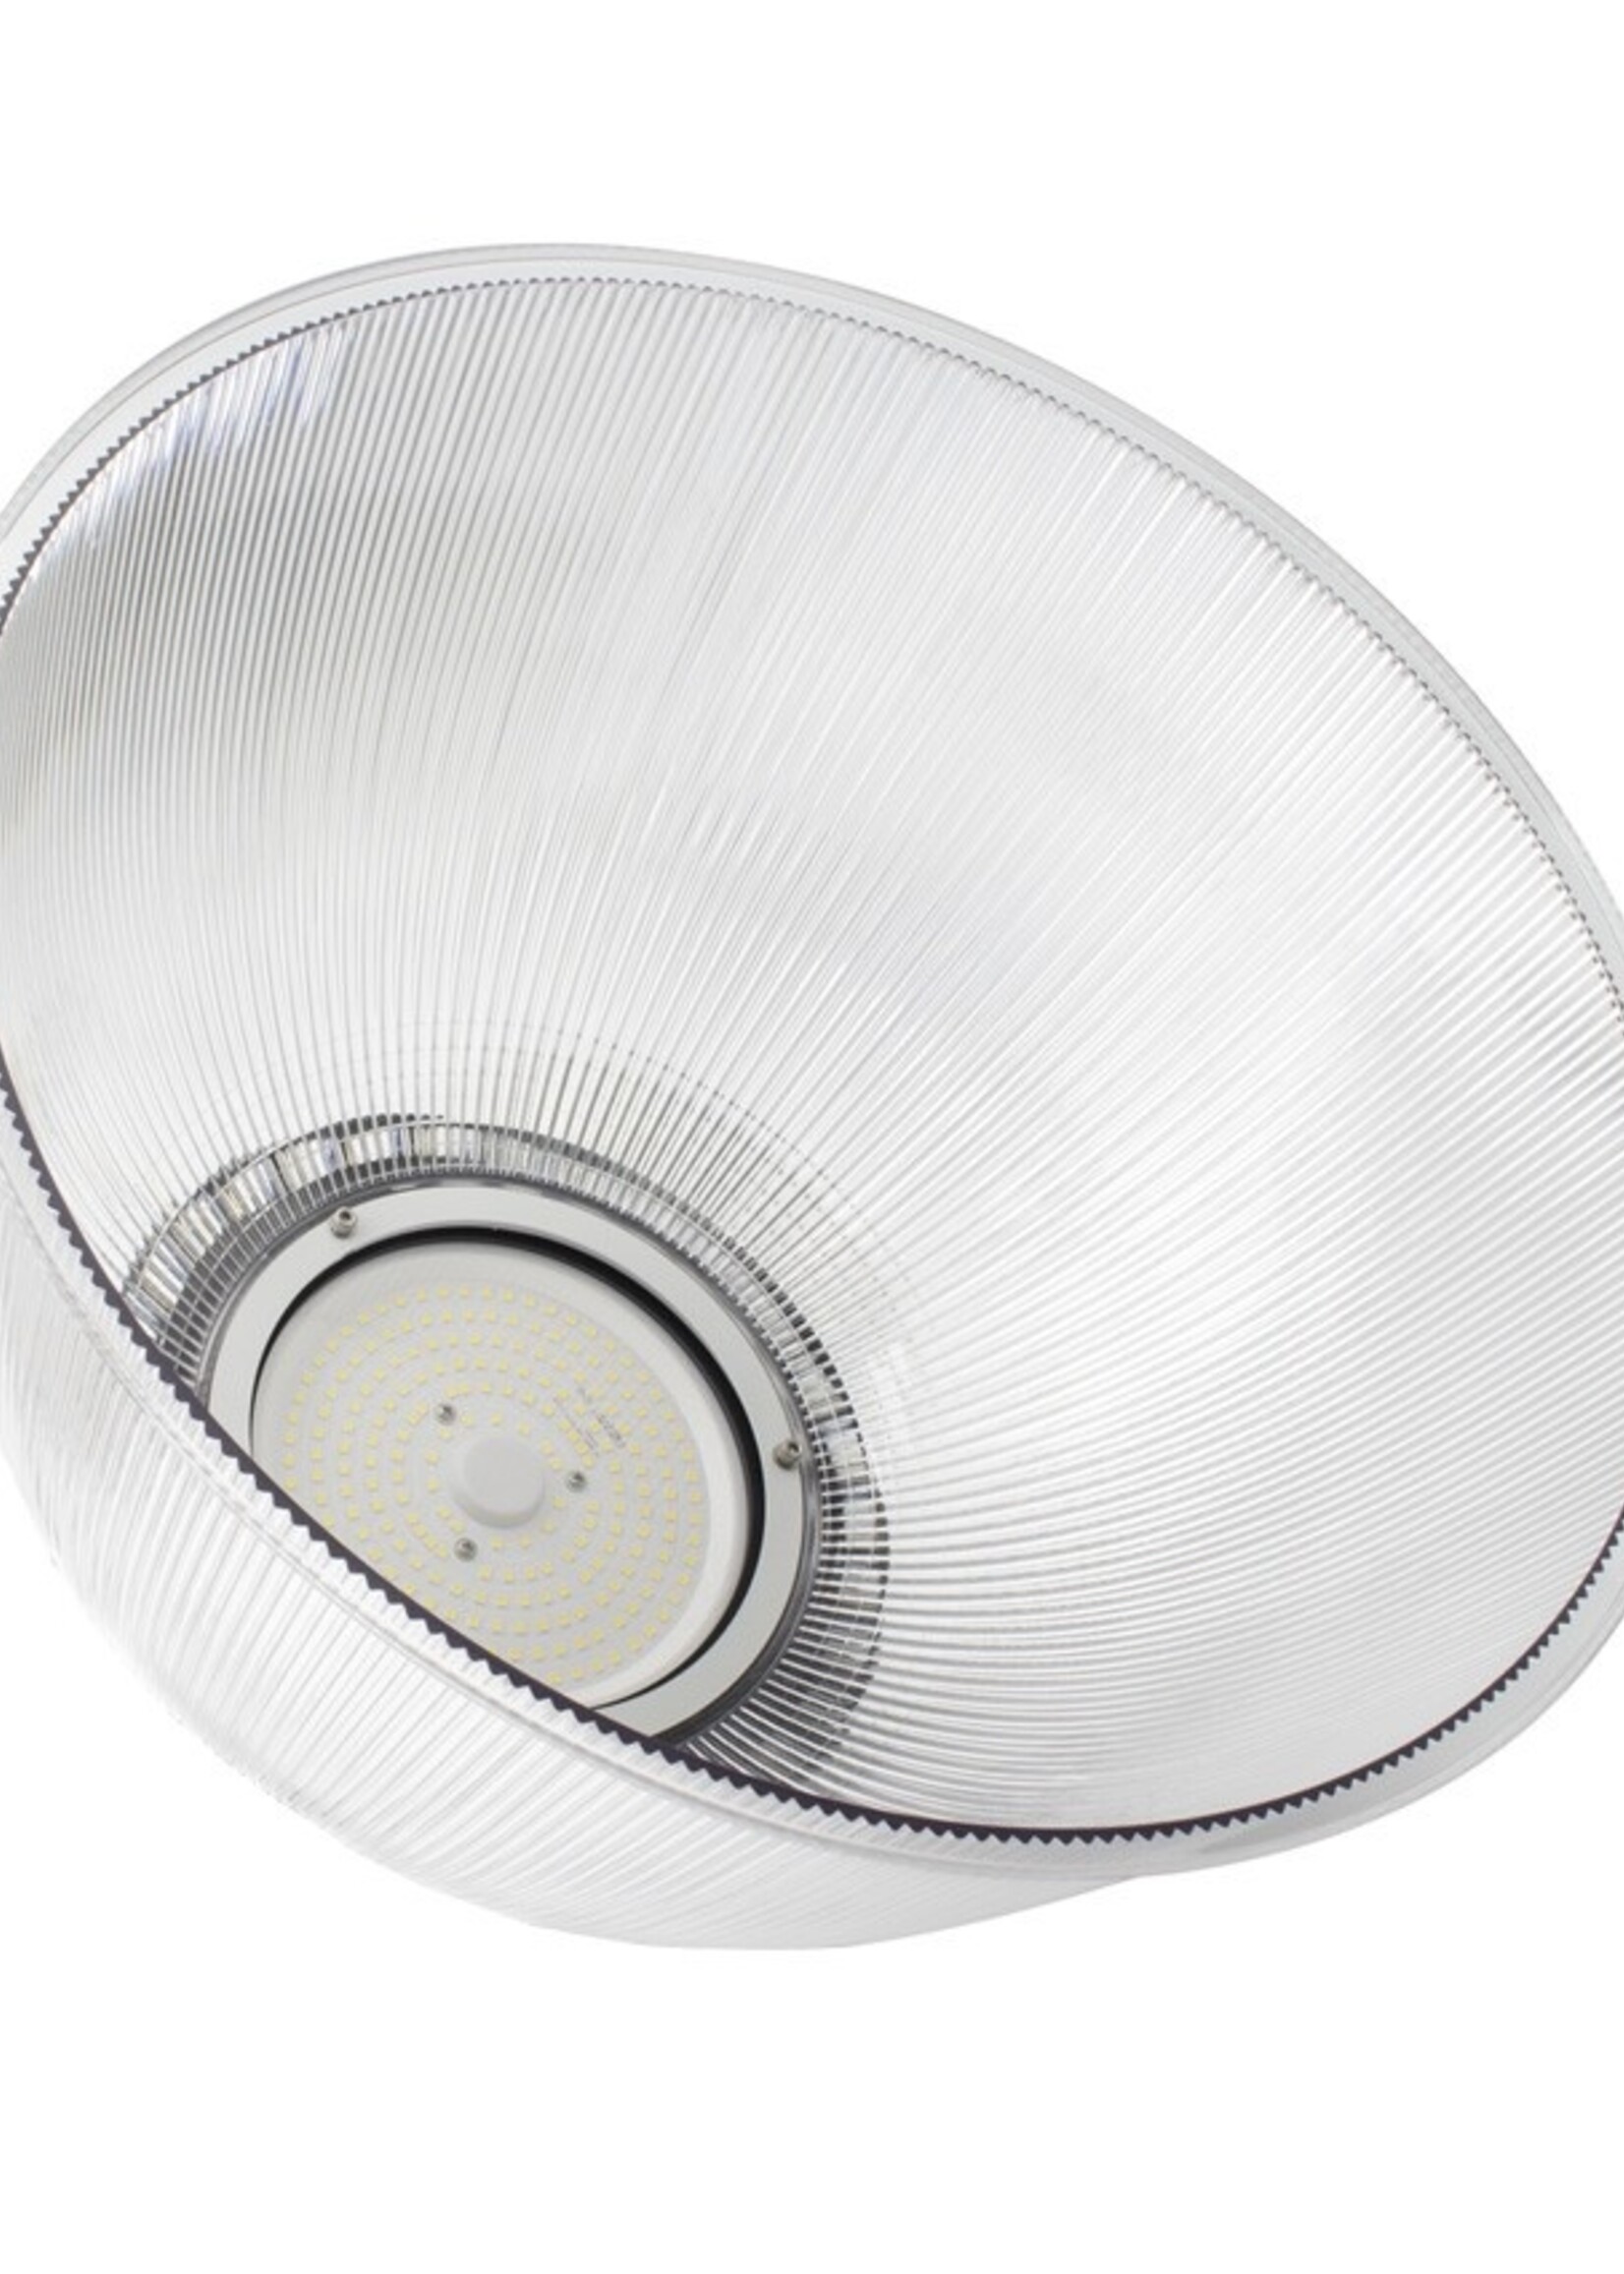 LEDWINKEL-Online LED UFO Highbay reflector hood for 100W 310x165mm